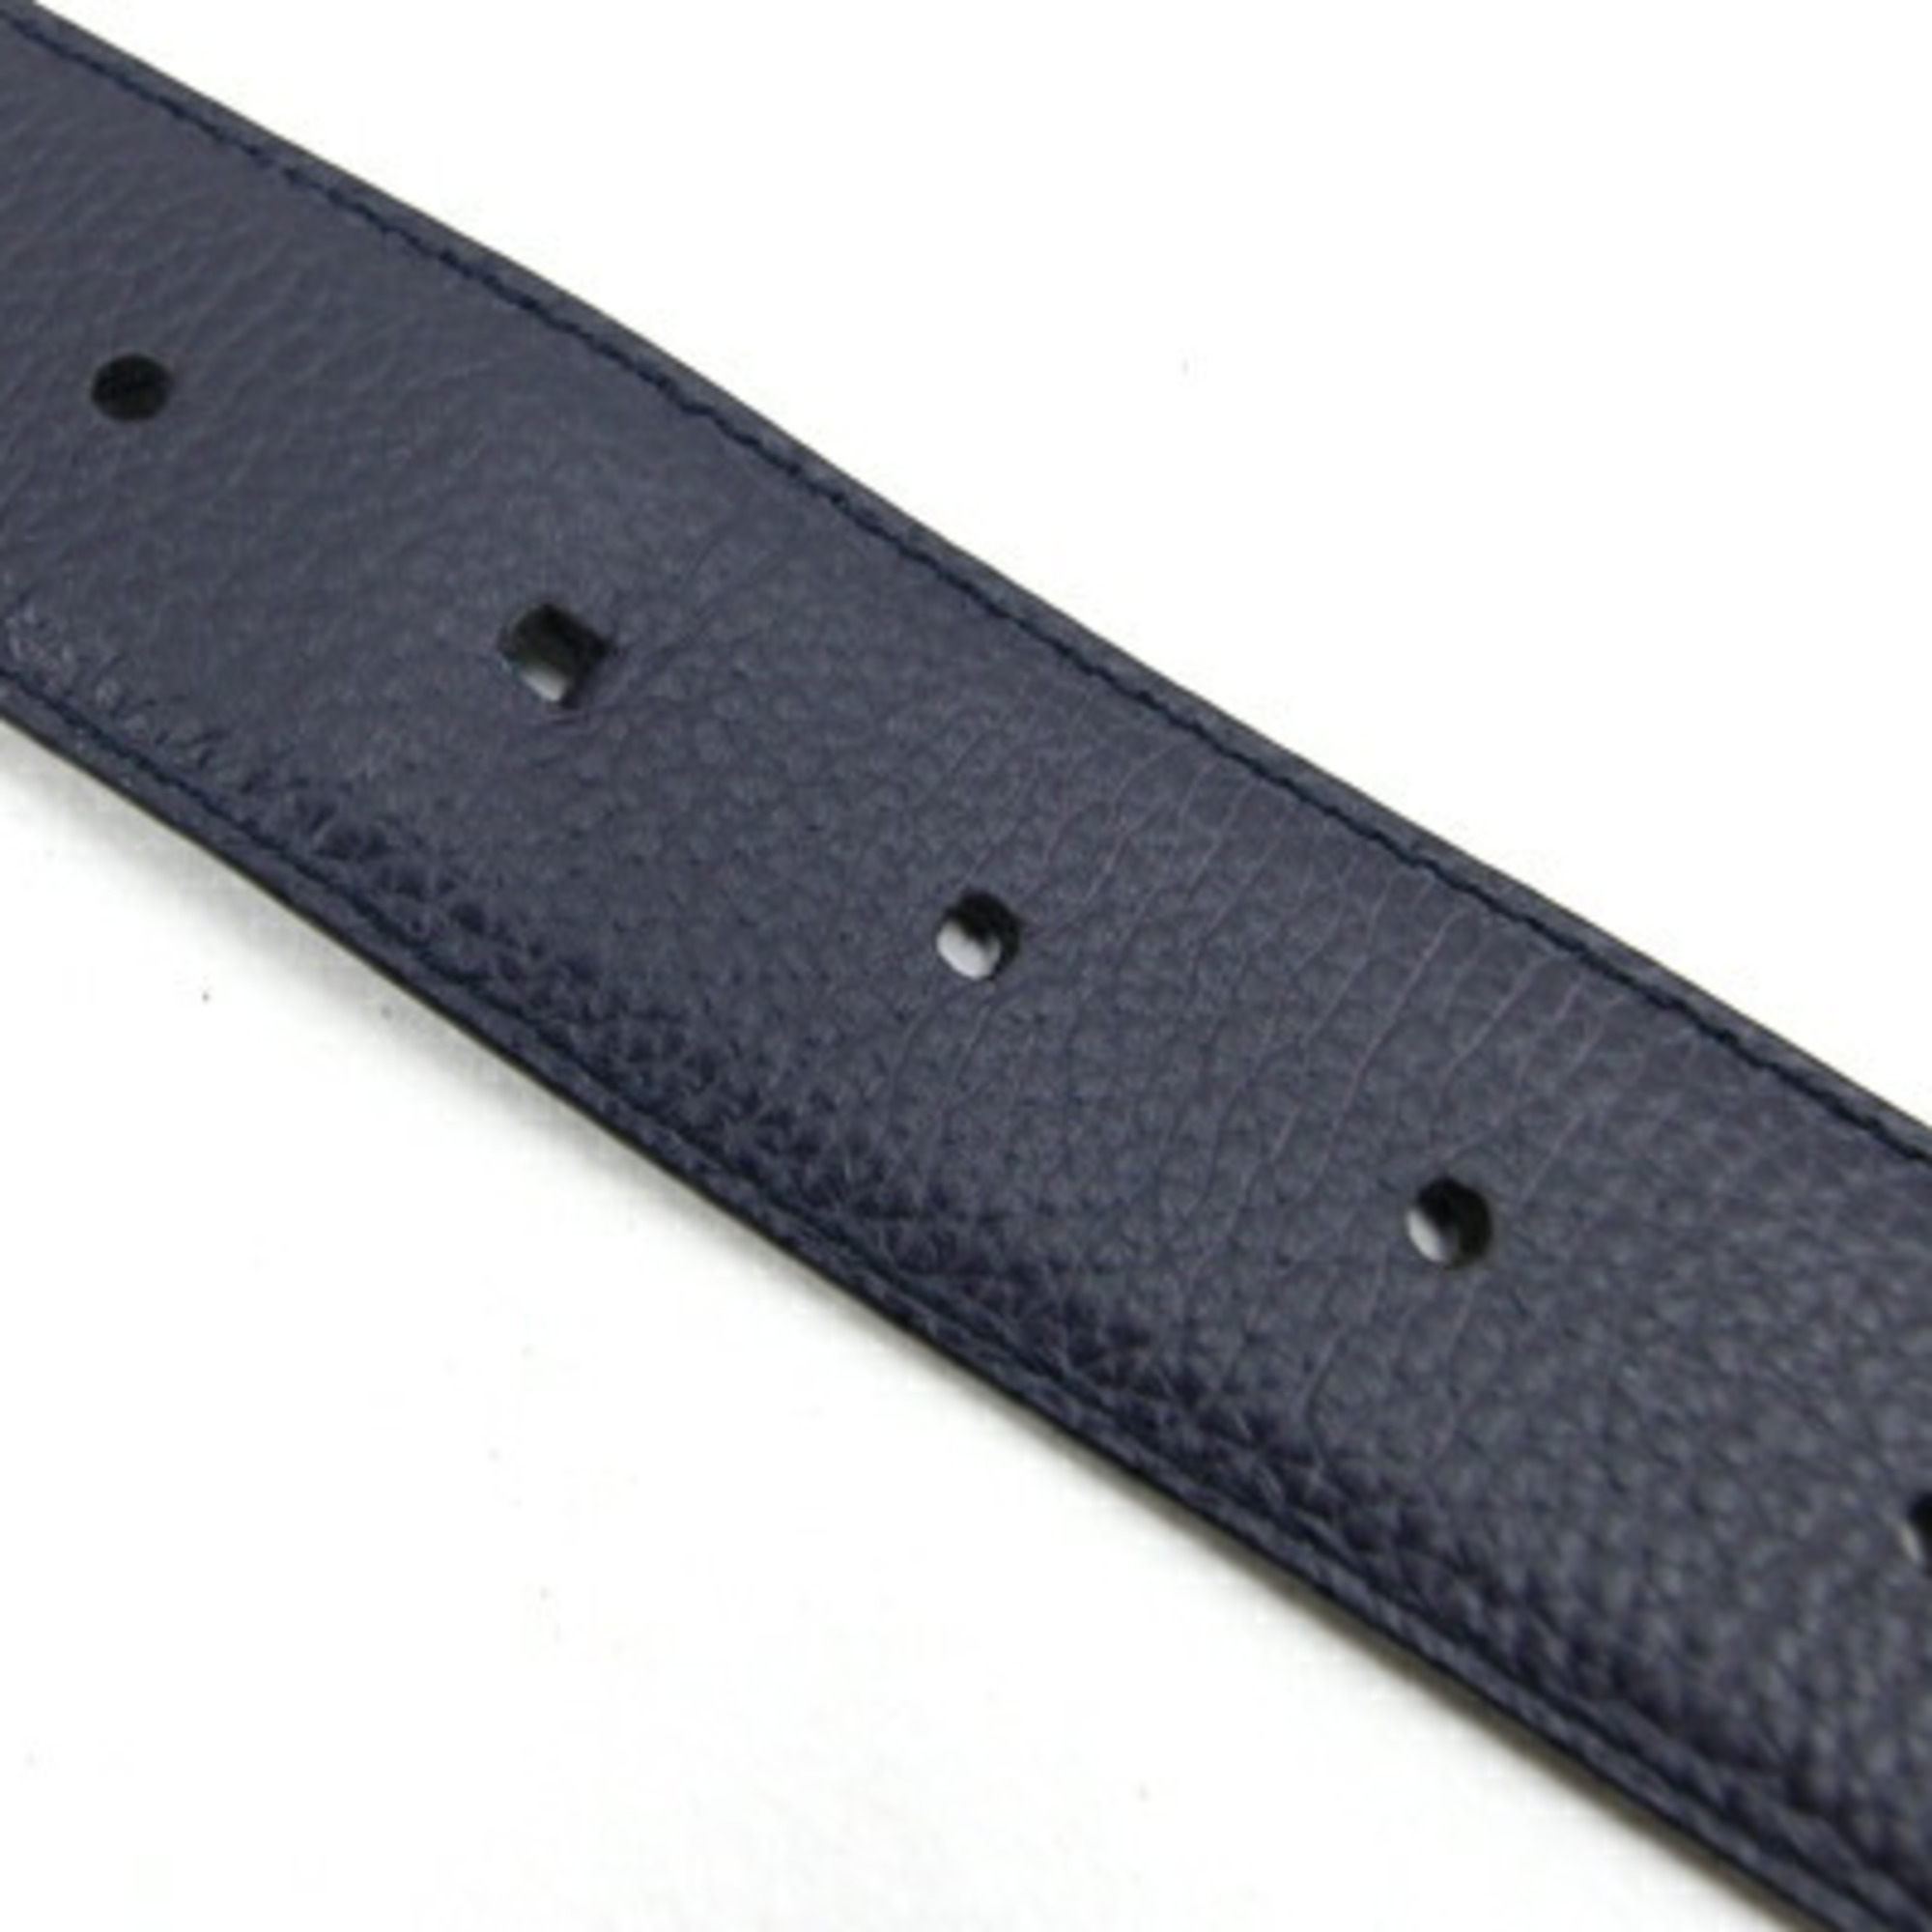 Dunhill Belt 18F4T28GR00142 Black Navy Leather Reversible Men's